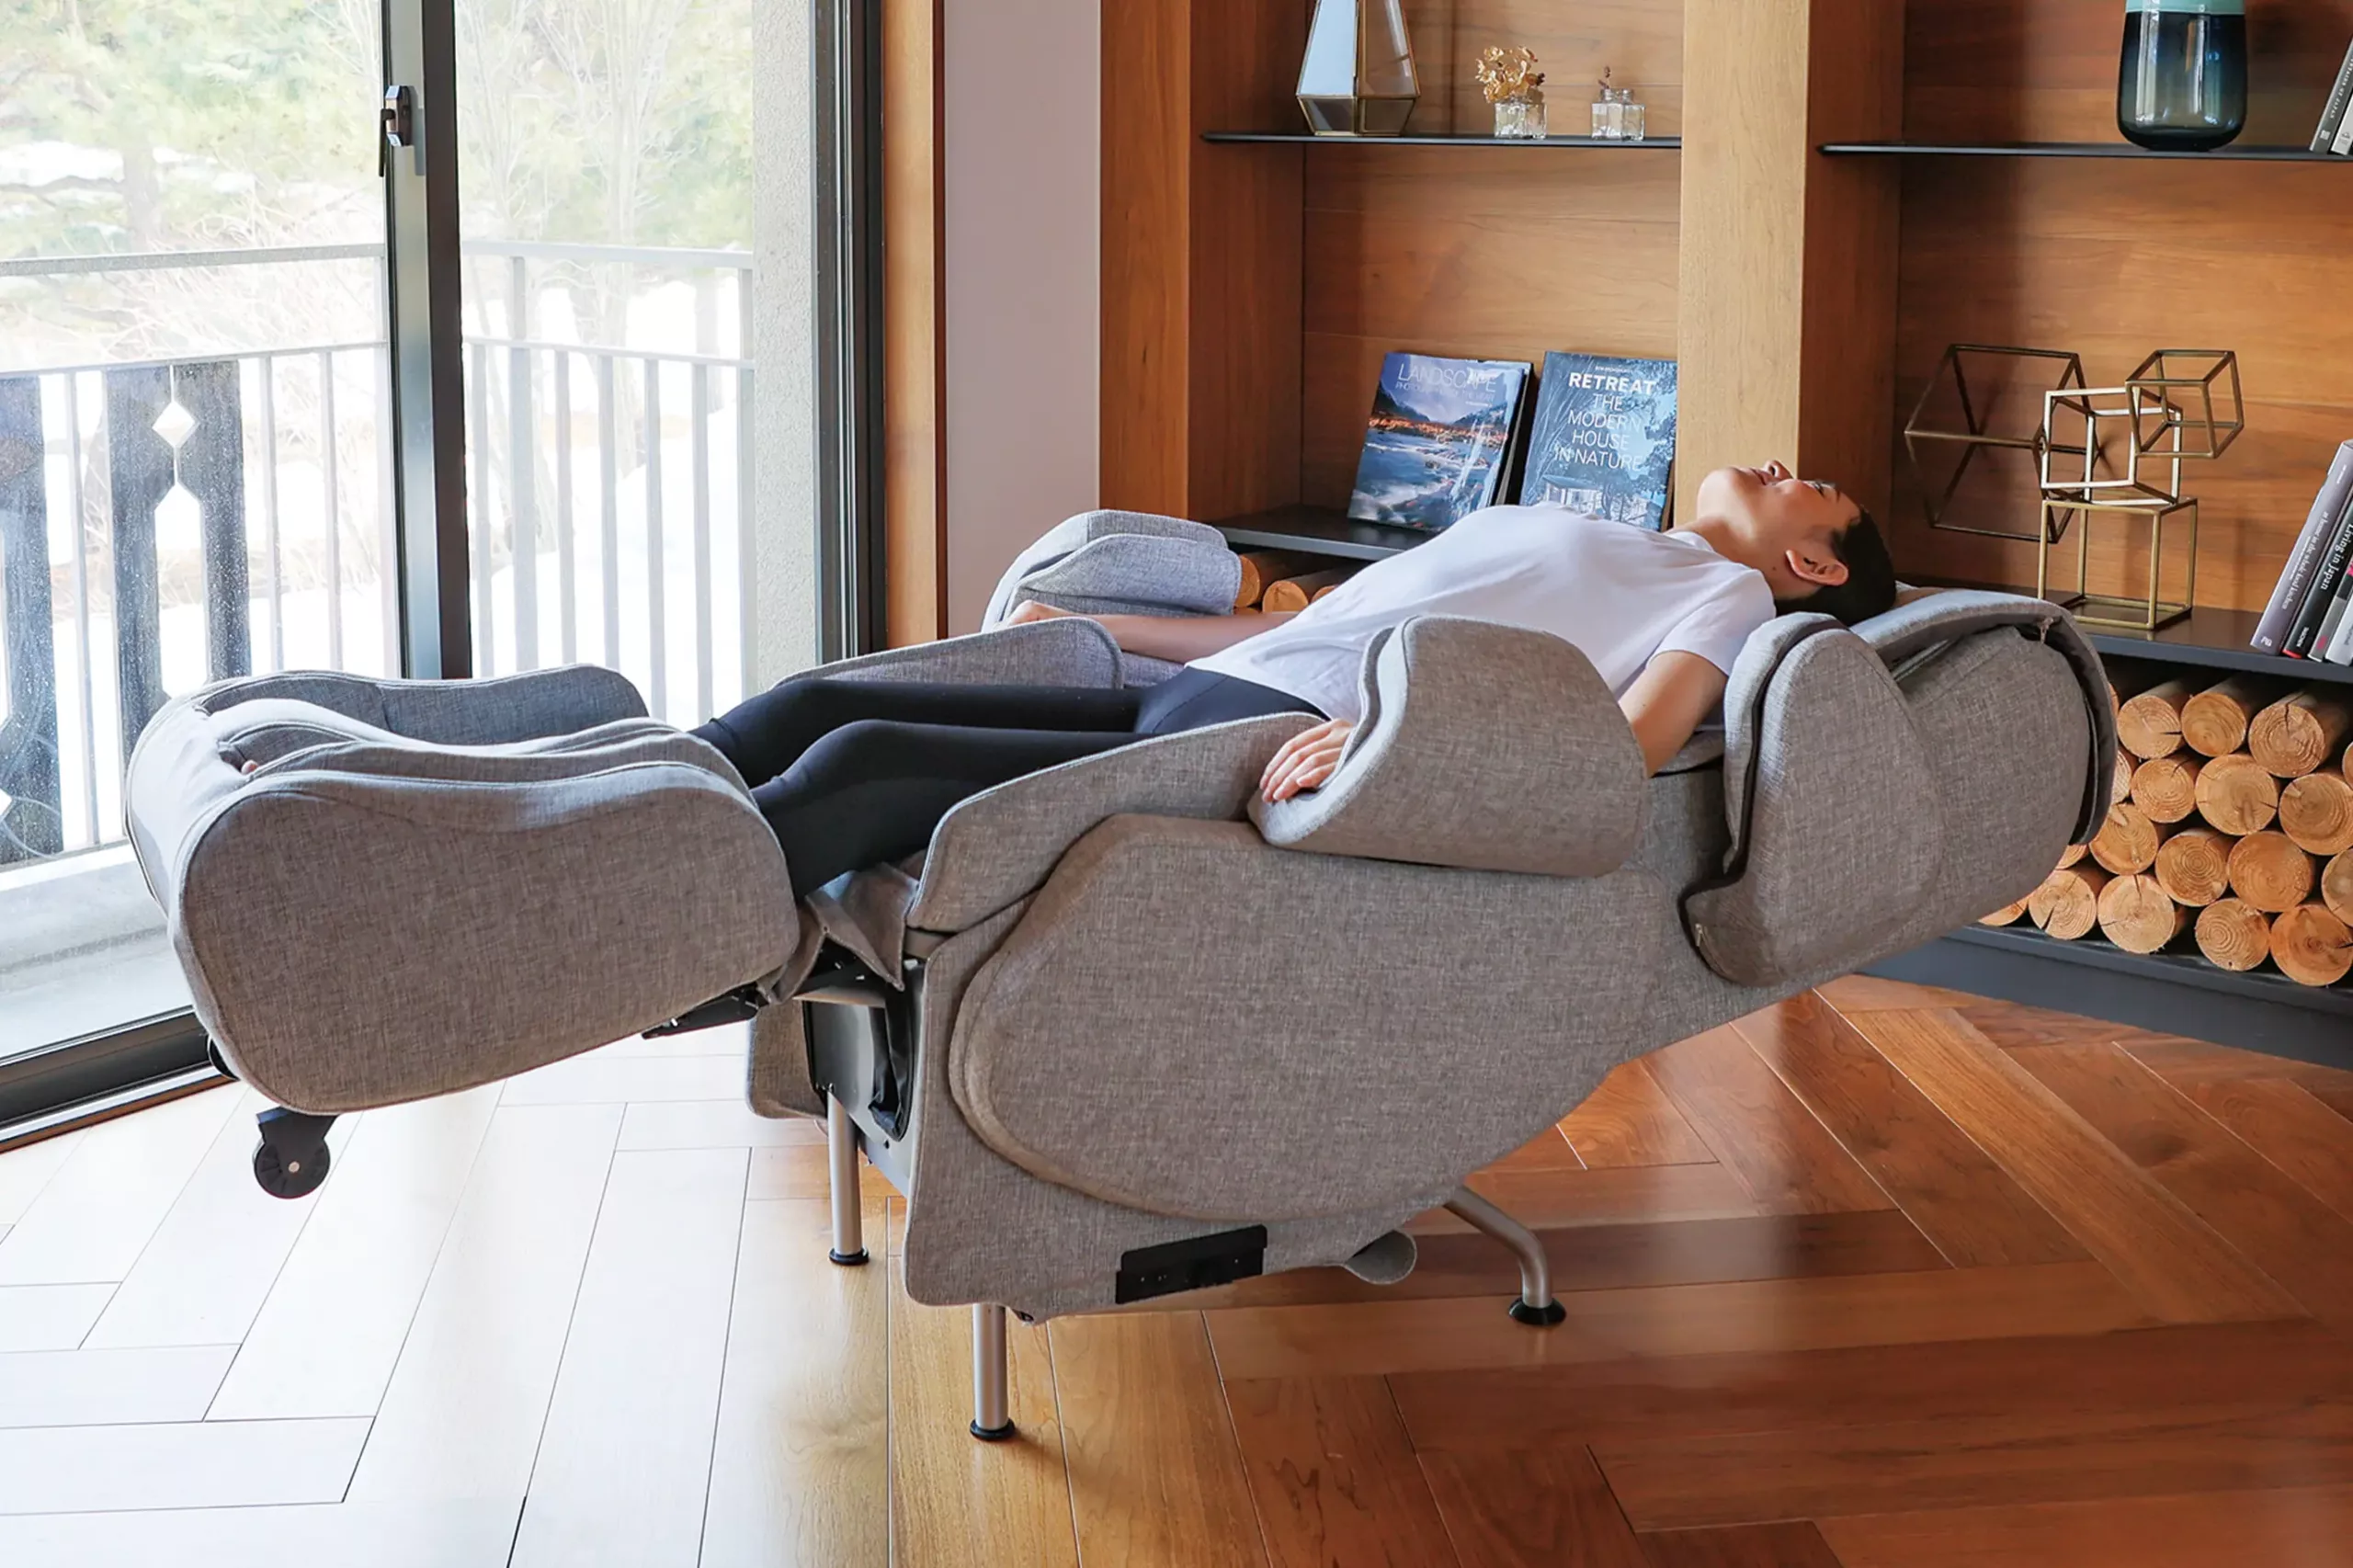 professional full body massage chair